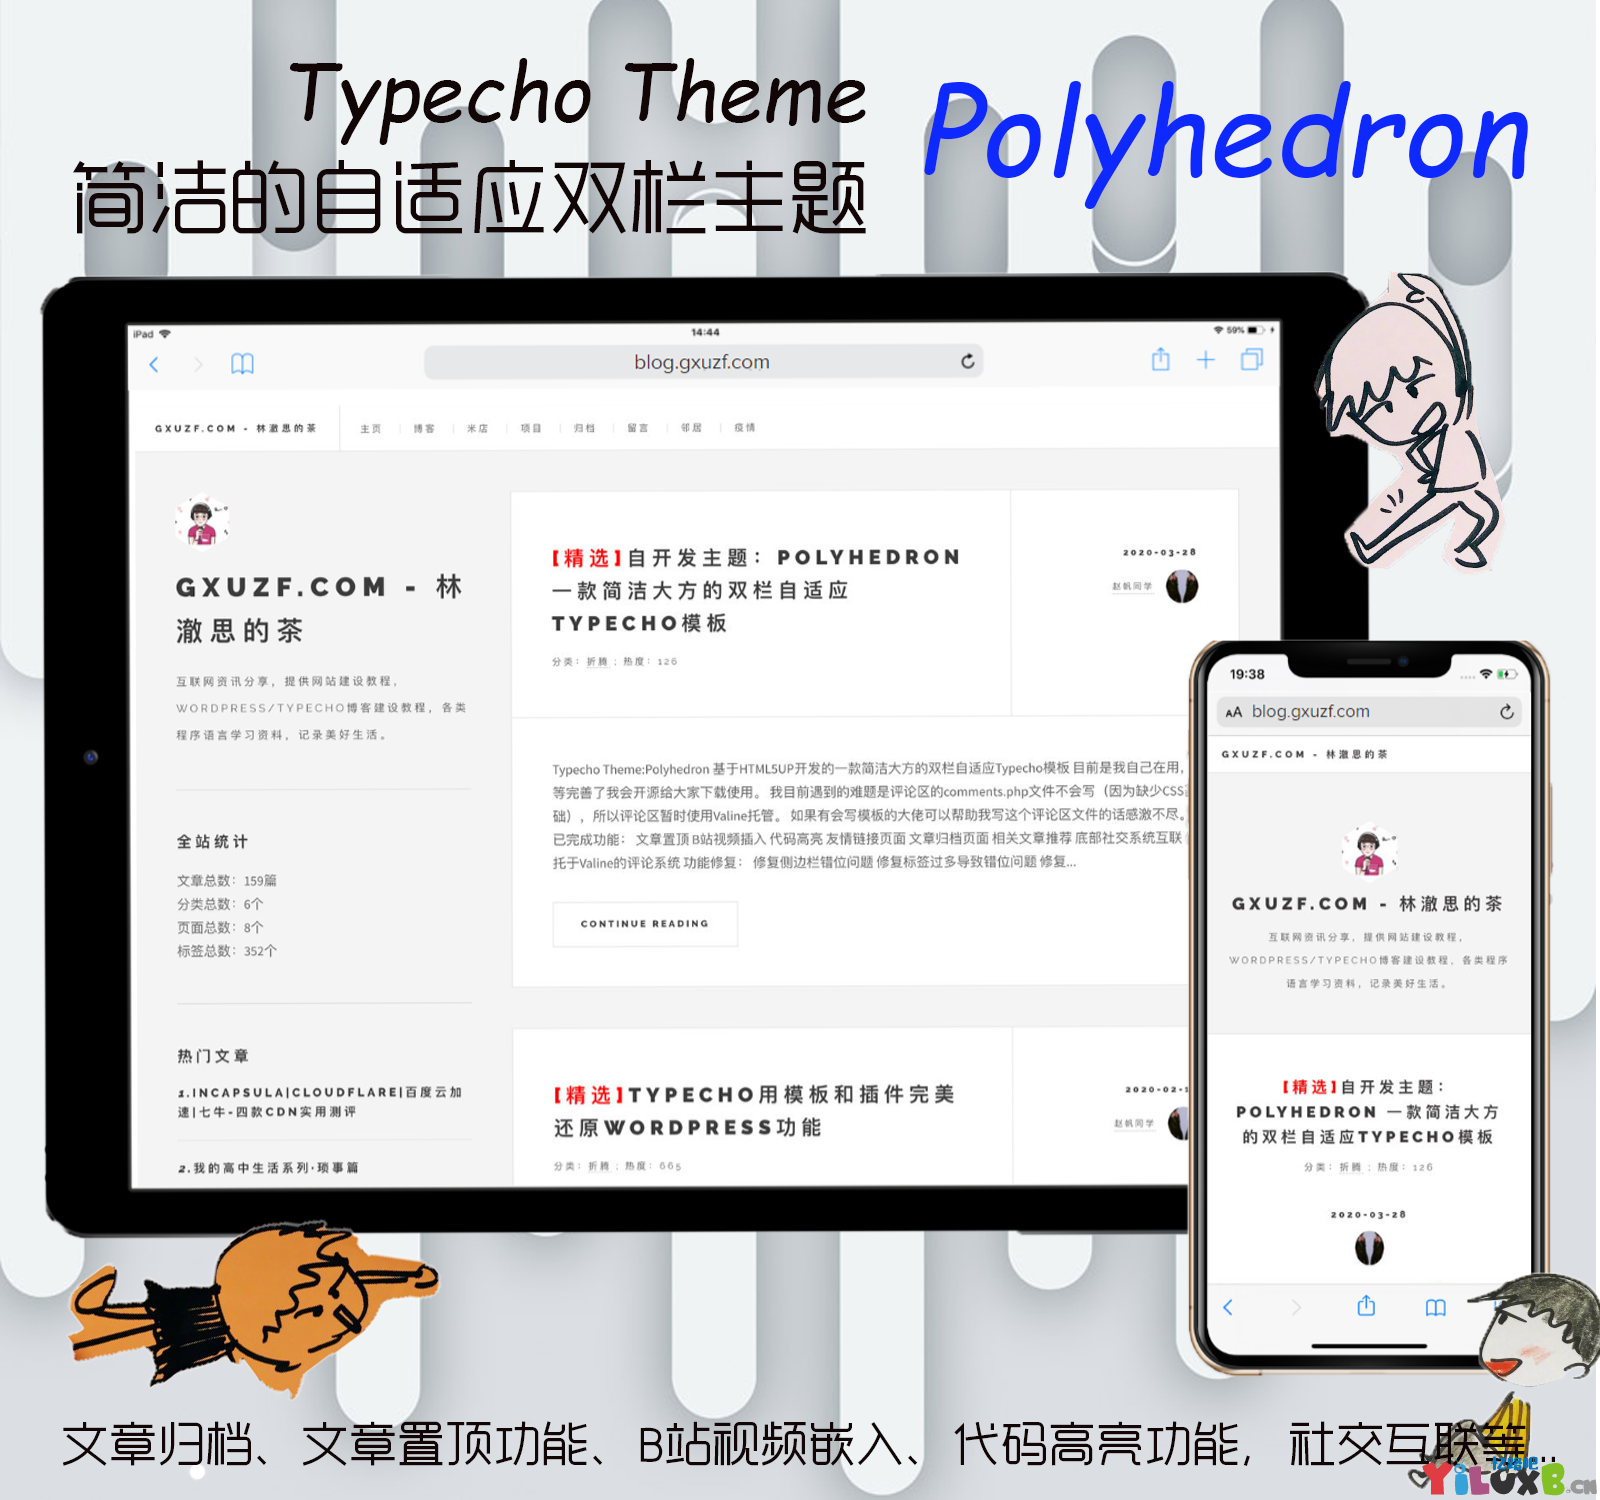 TYPECHO简洁大方双栏自适应POLYHEDRON主题